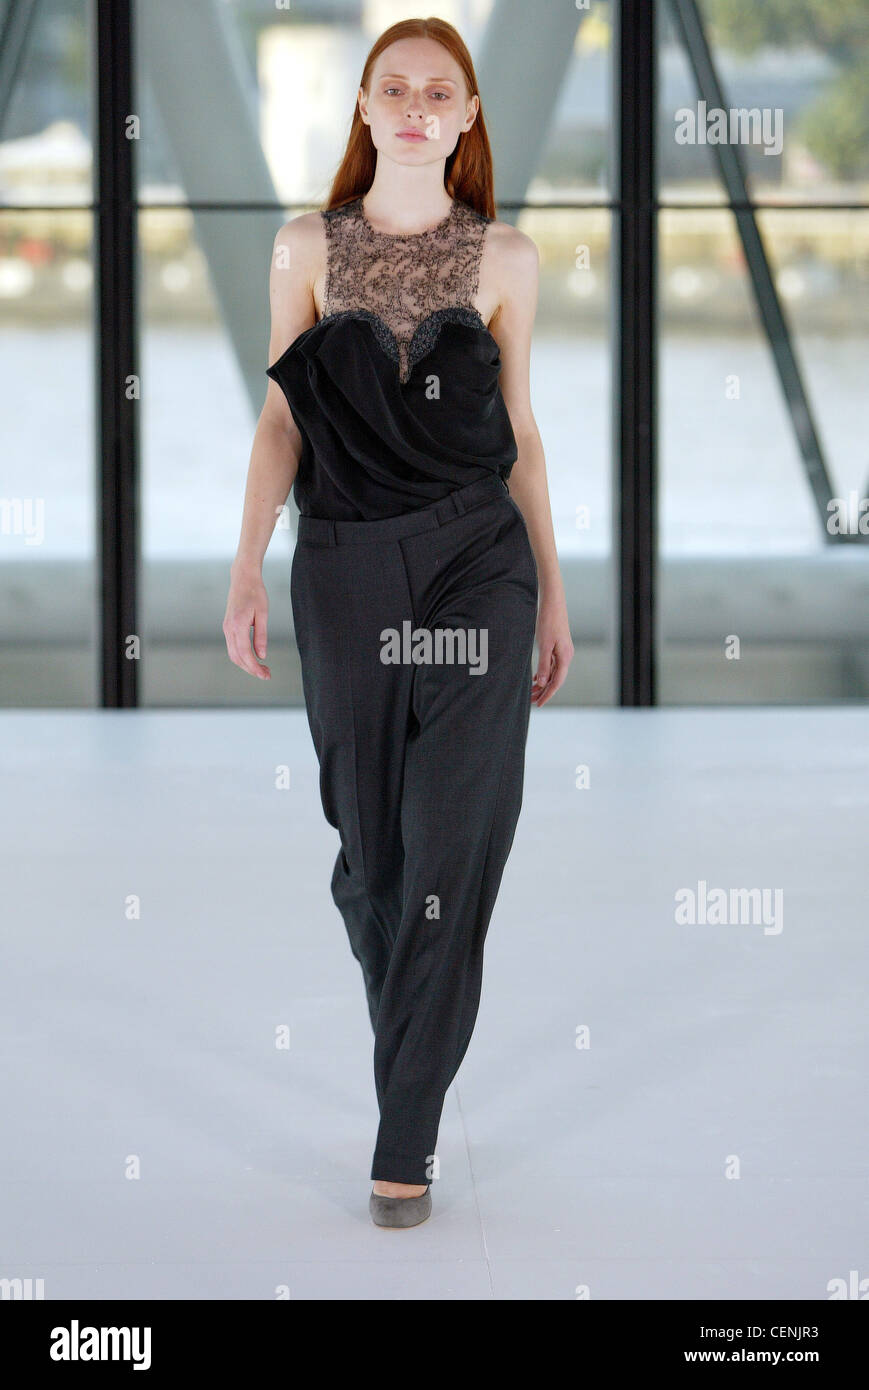 PPQ Londres listo para ponerse S corset negro blusa holgada y pantalones  tappered Fotografía de stock - Alamy